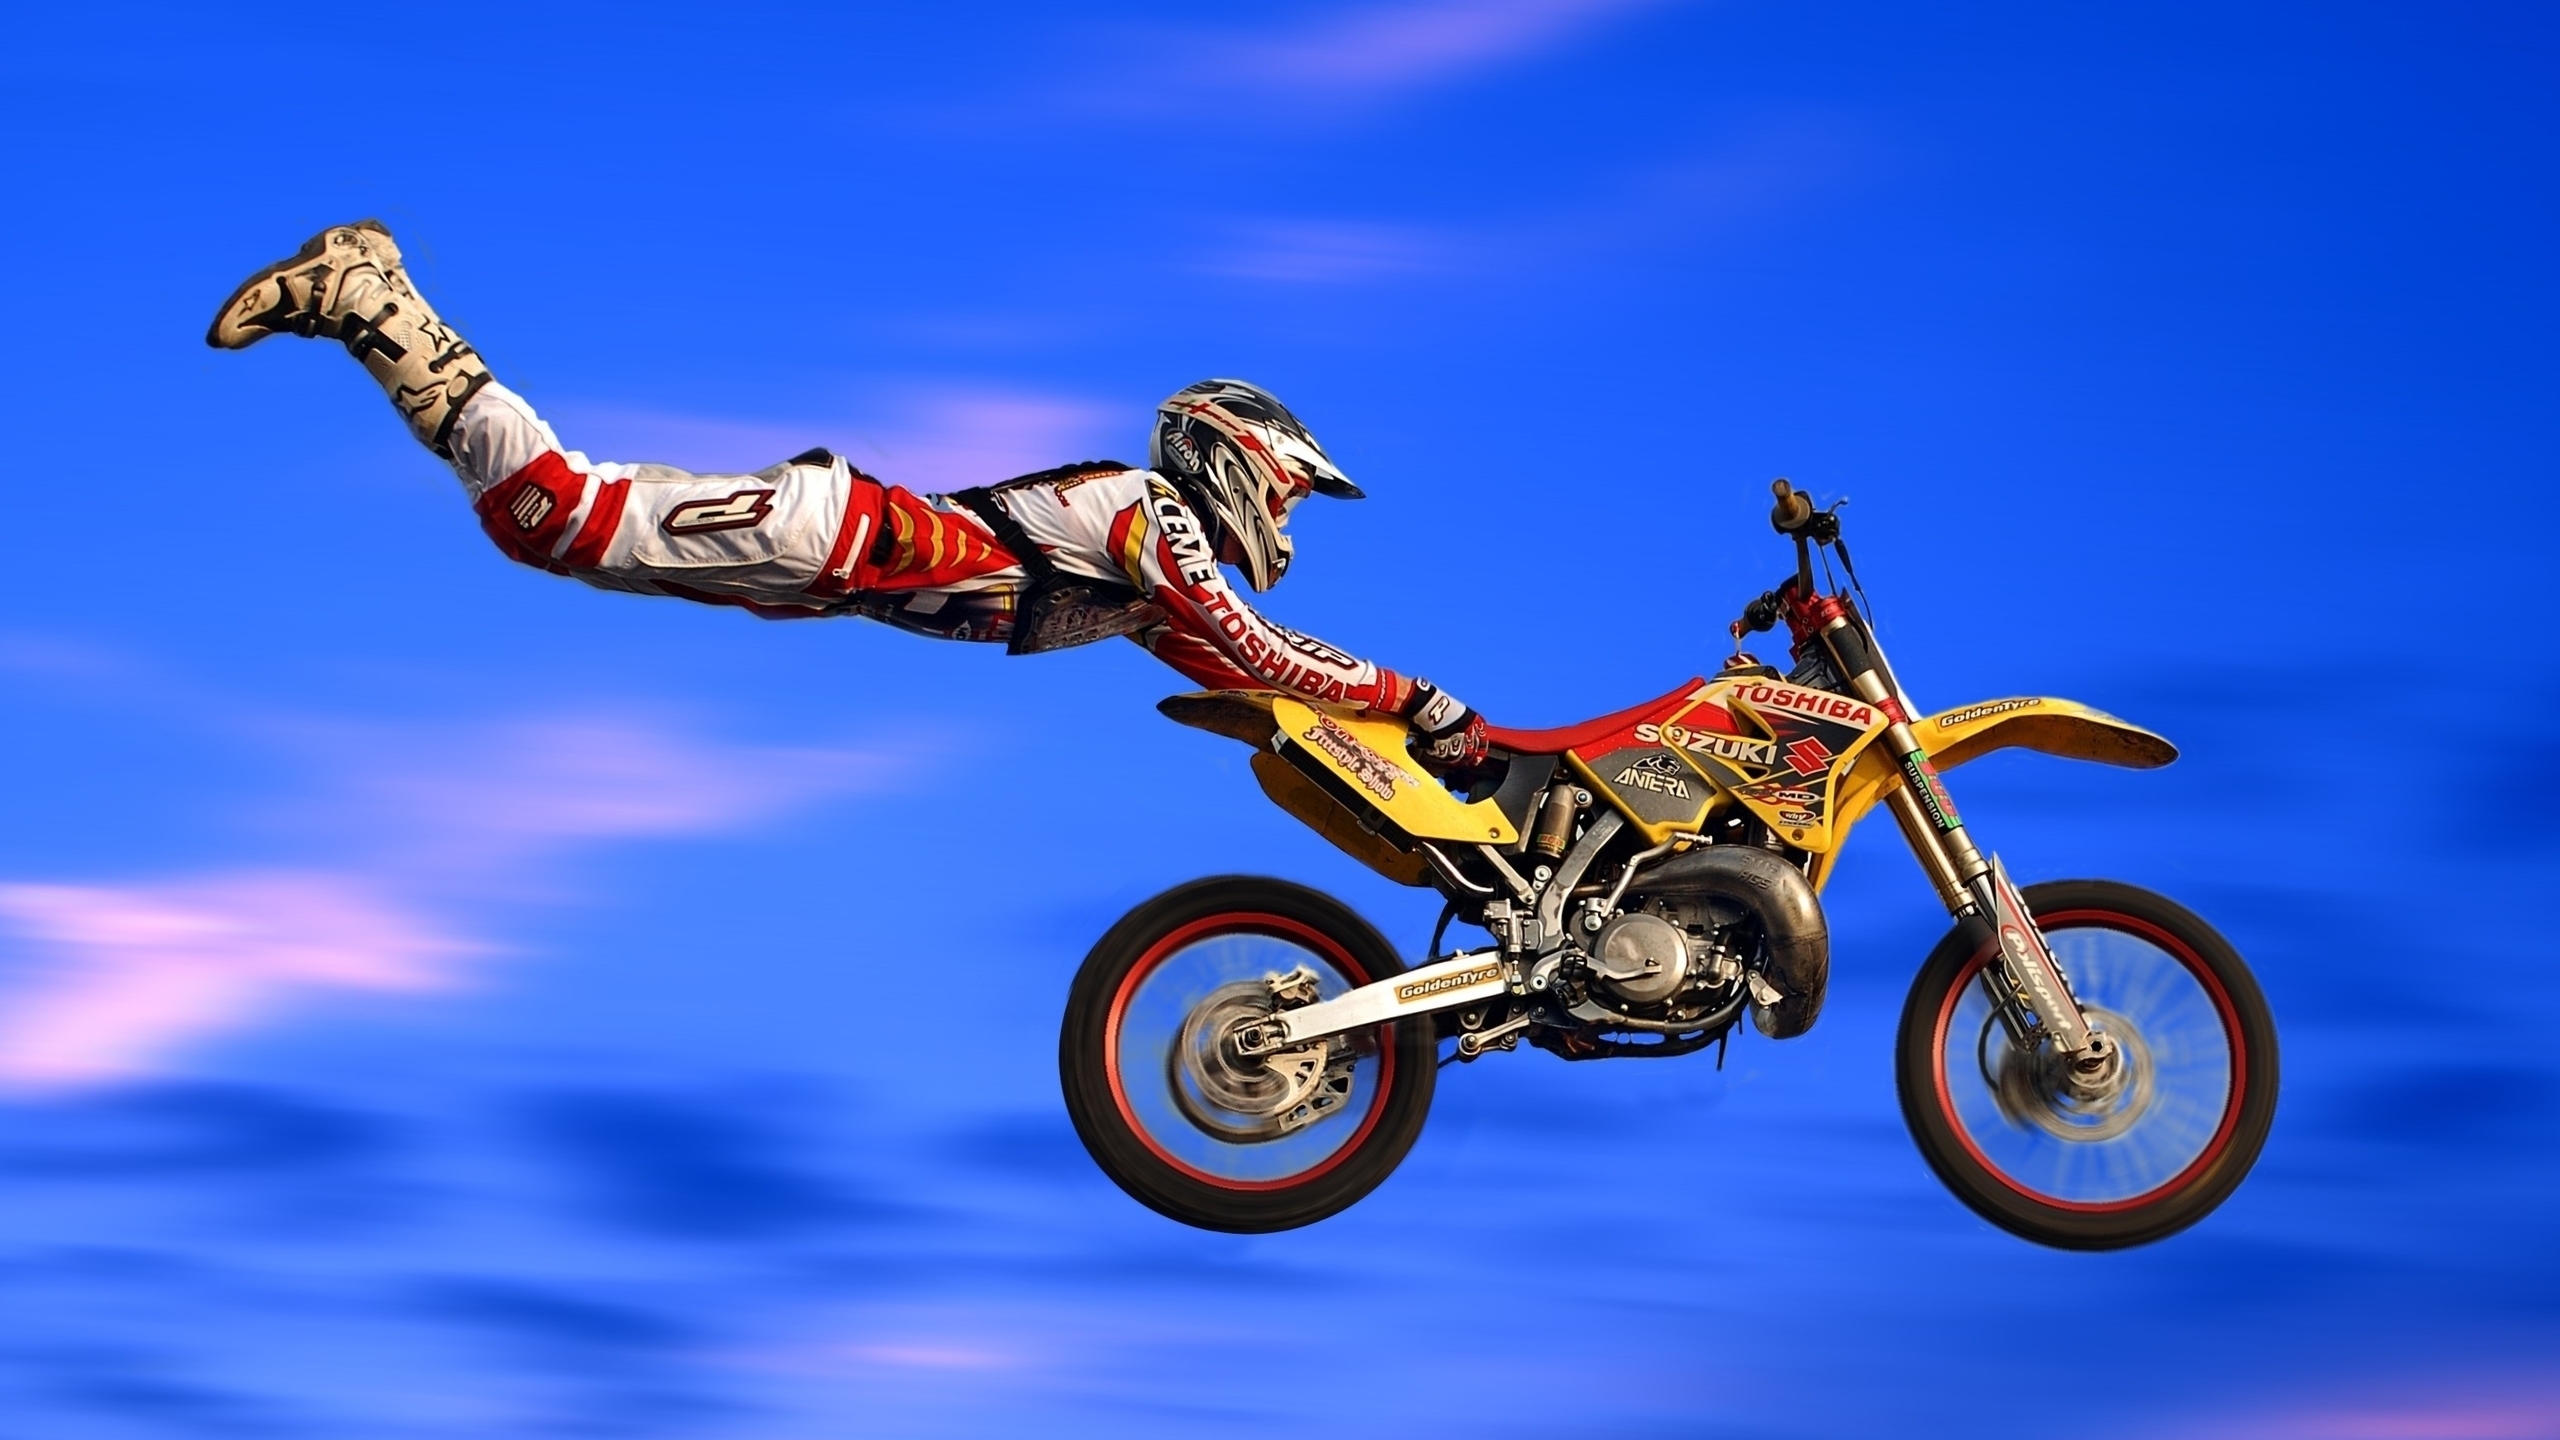 Moto Acrobatic Figure for 2560x1440 HDTV resolution